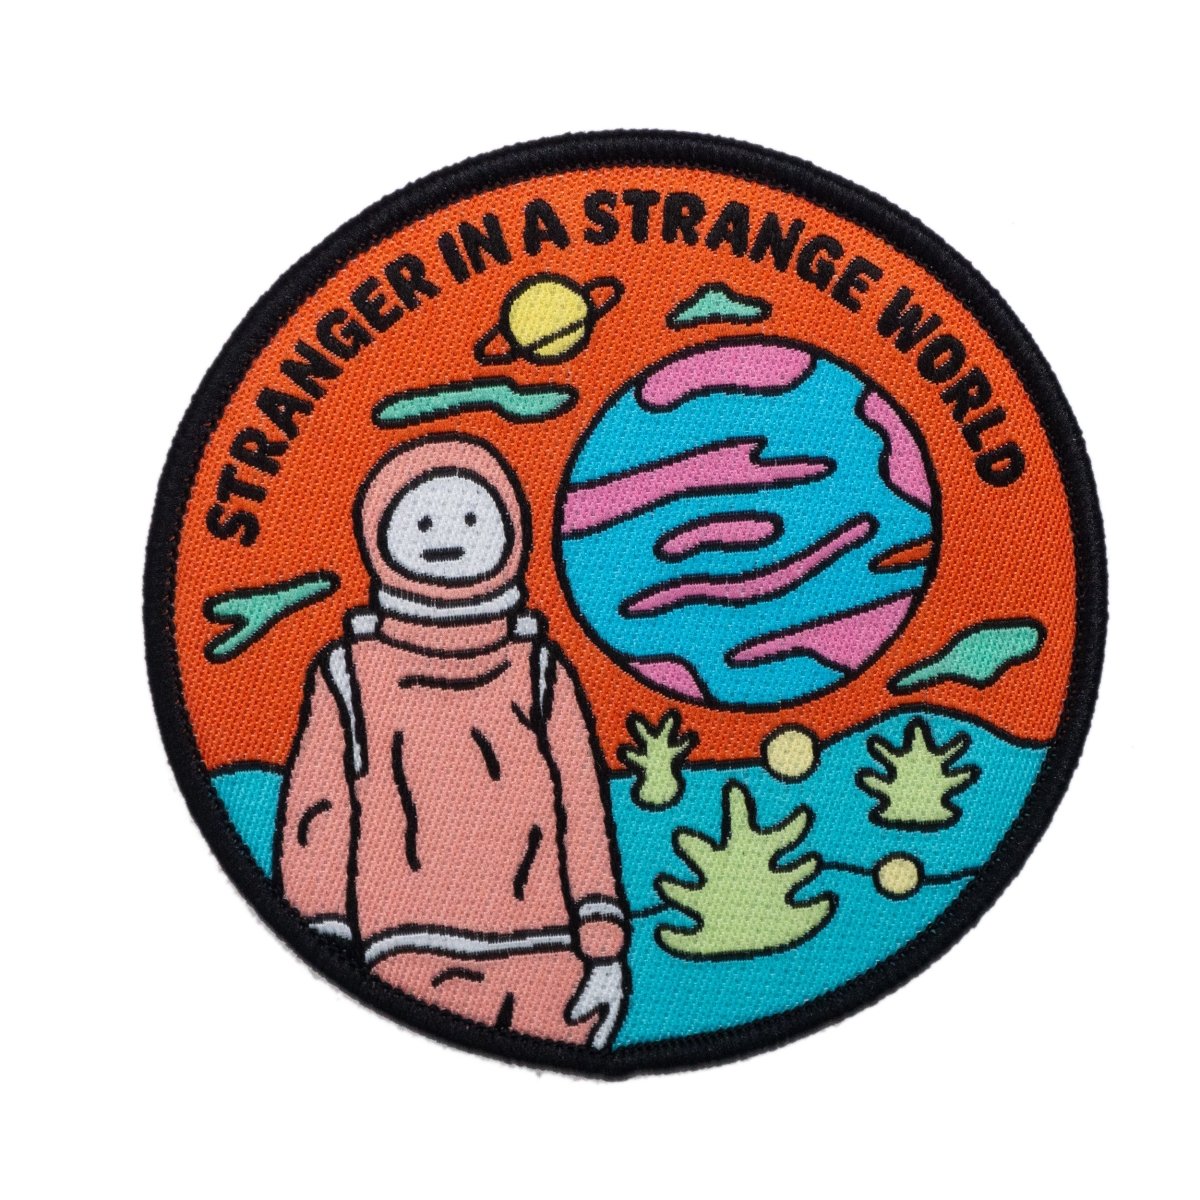 Stranger in a strange world patch - Patch - Pretty Bad Co.